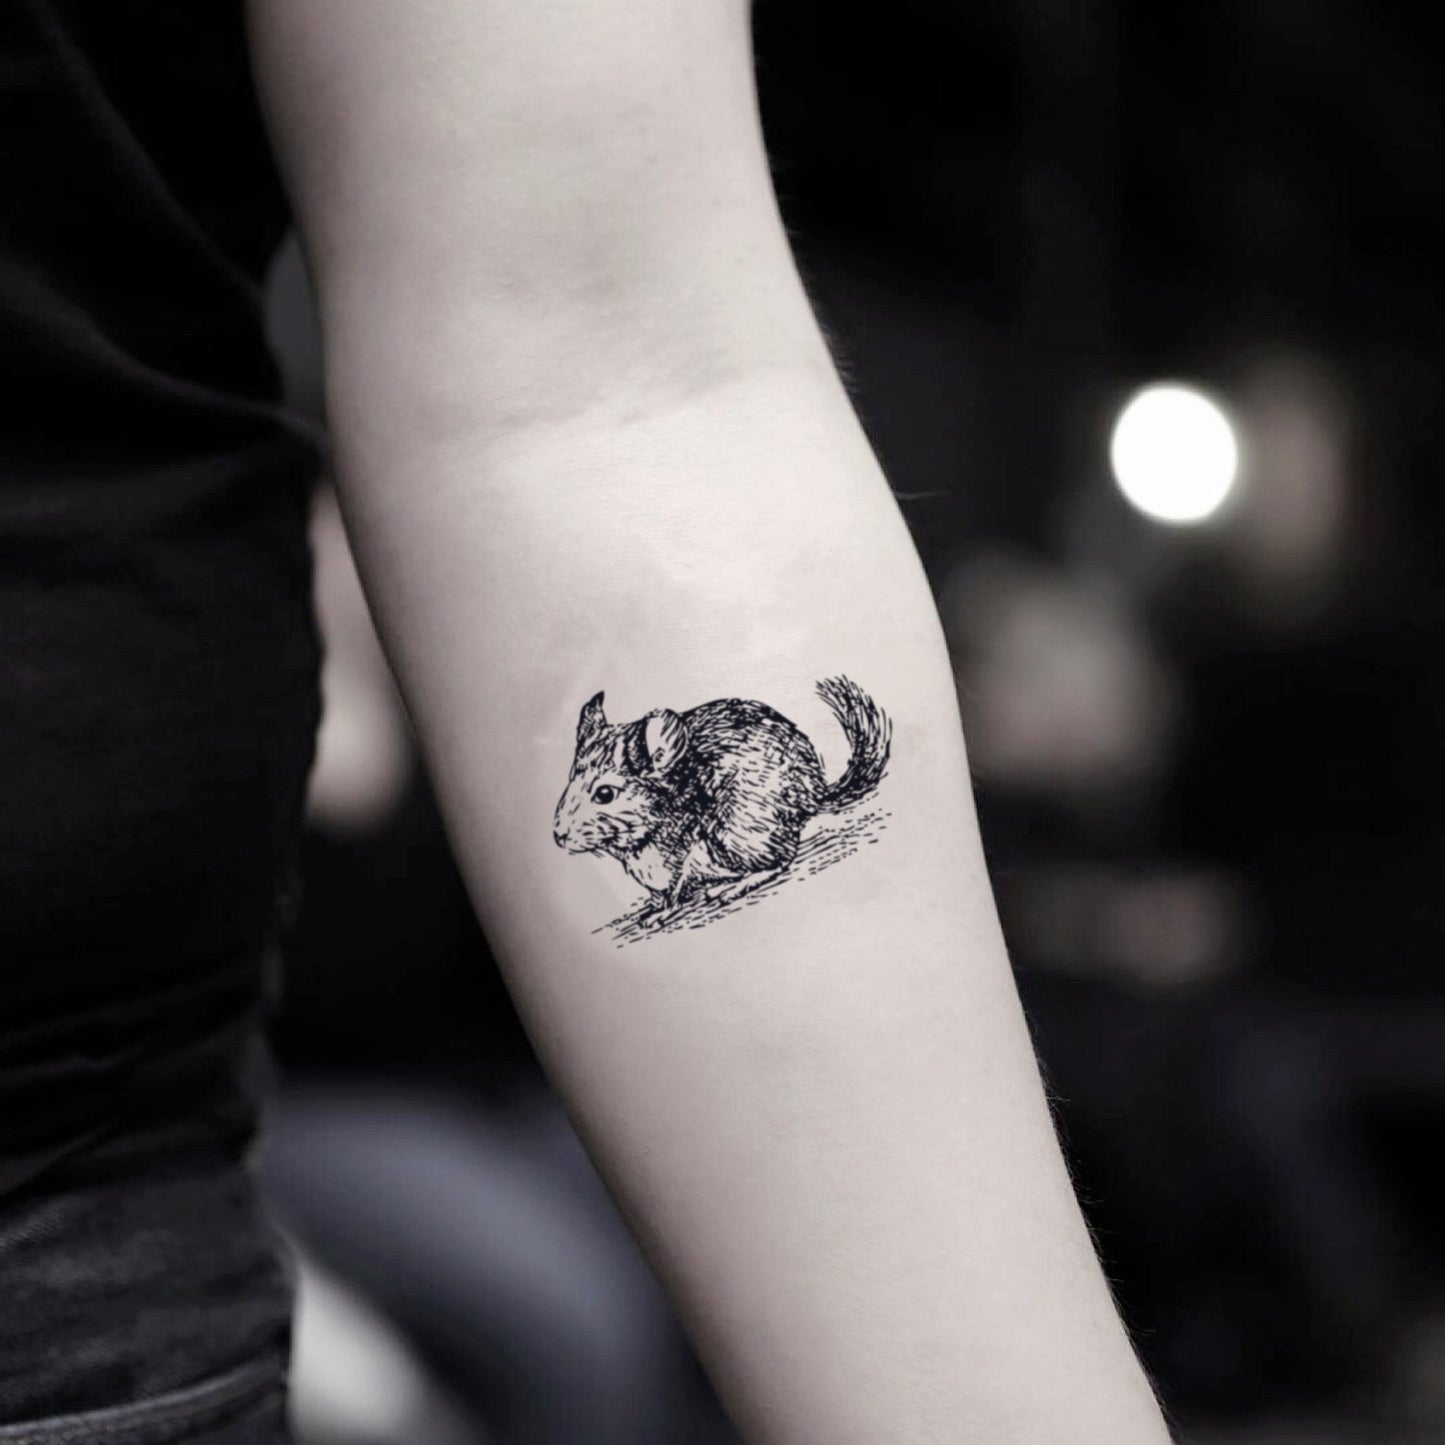 fake small chinchilla animal temporary tattoo sticker design idea on inner arm